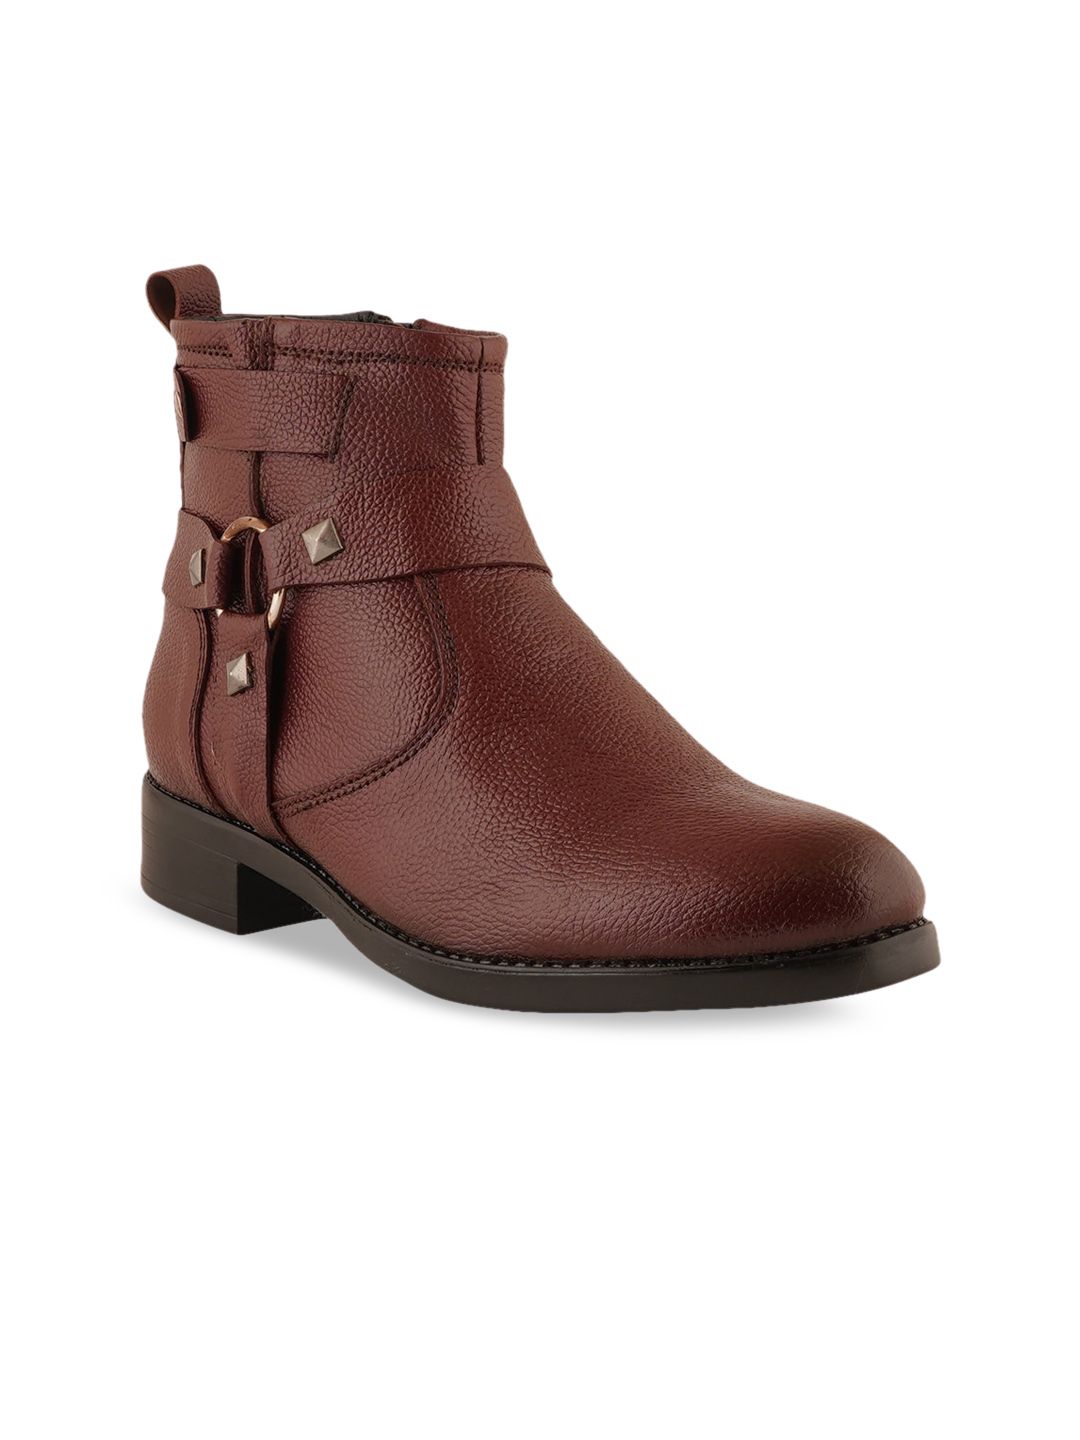 pelle albero Maroon Textured Leather Block Heeled Boots Price in India